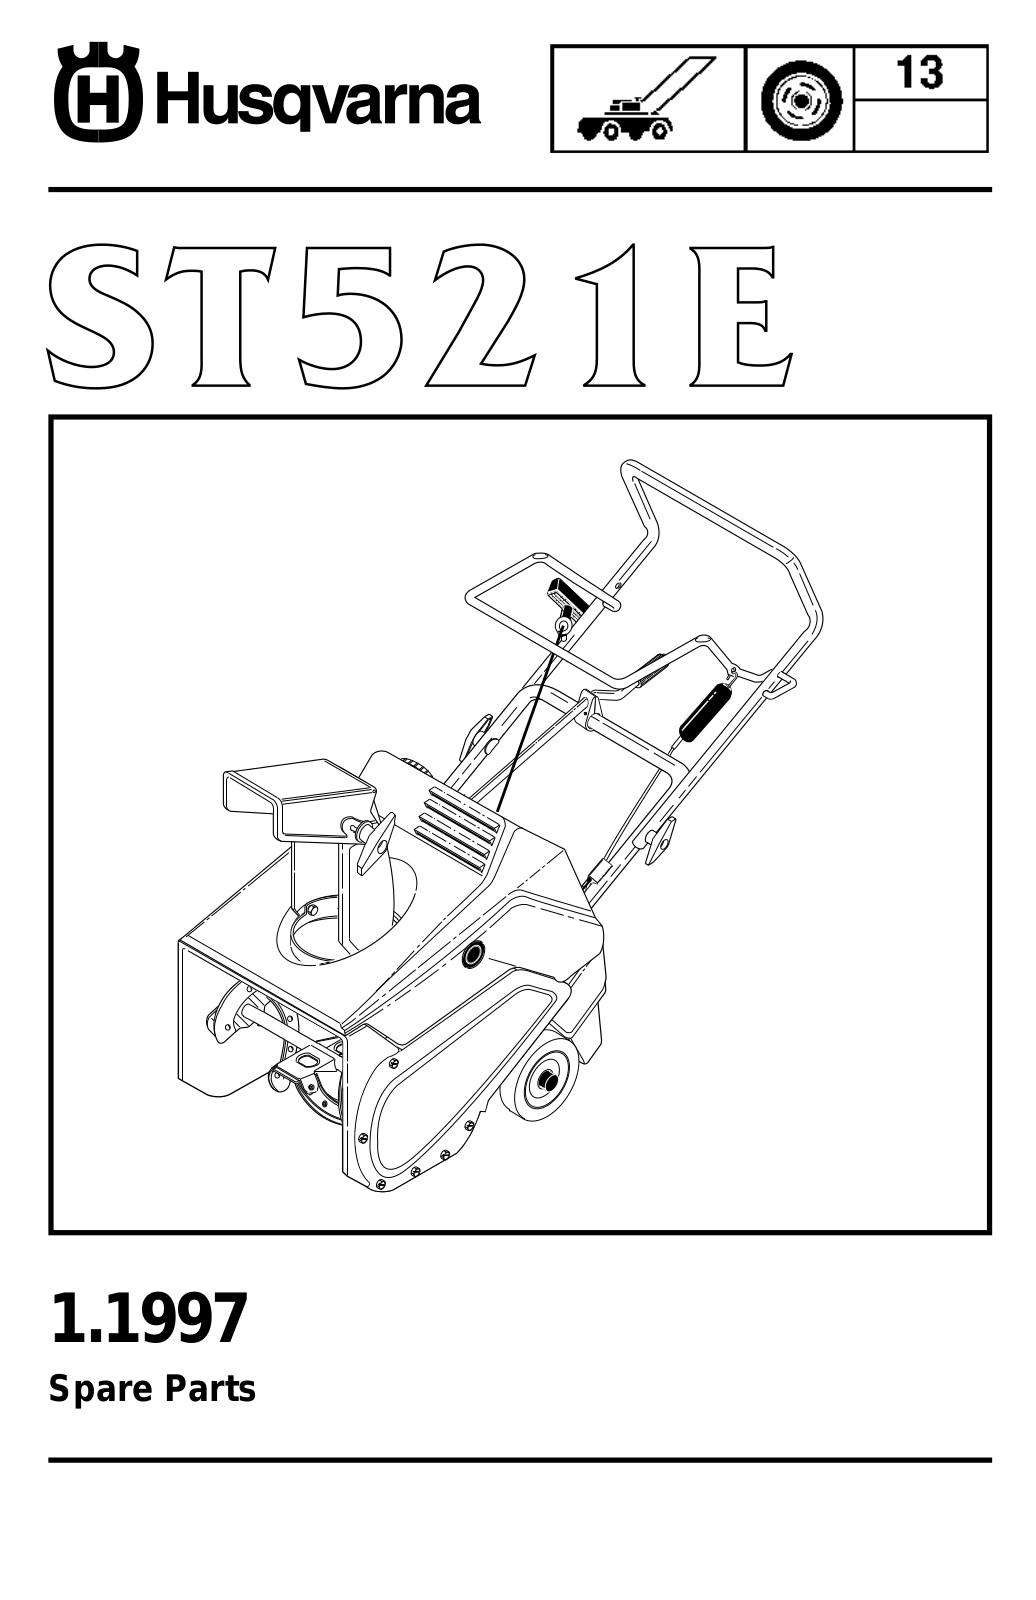 Husqvarna ST521E User Manual